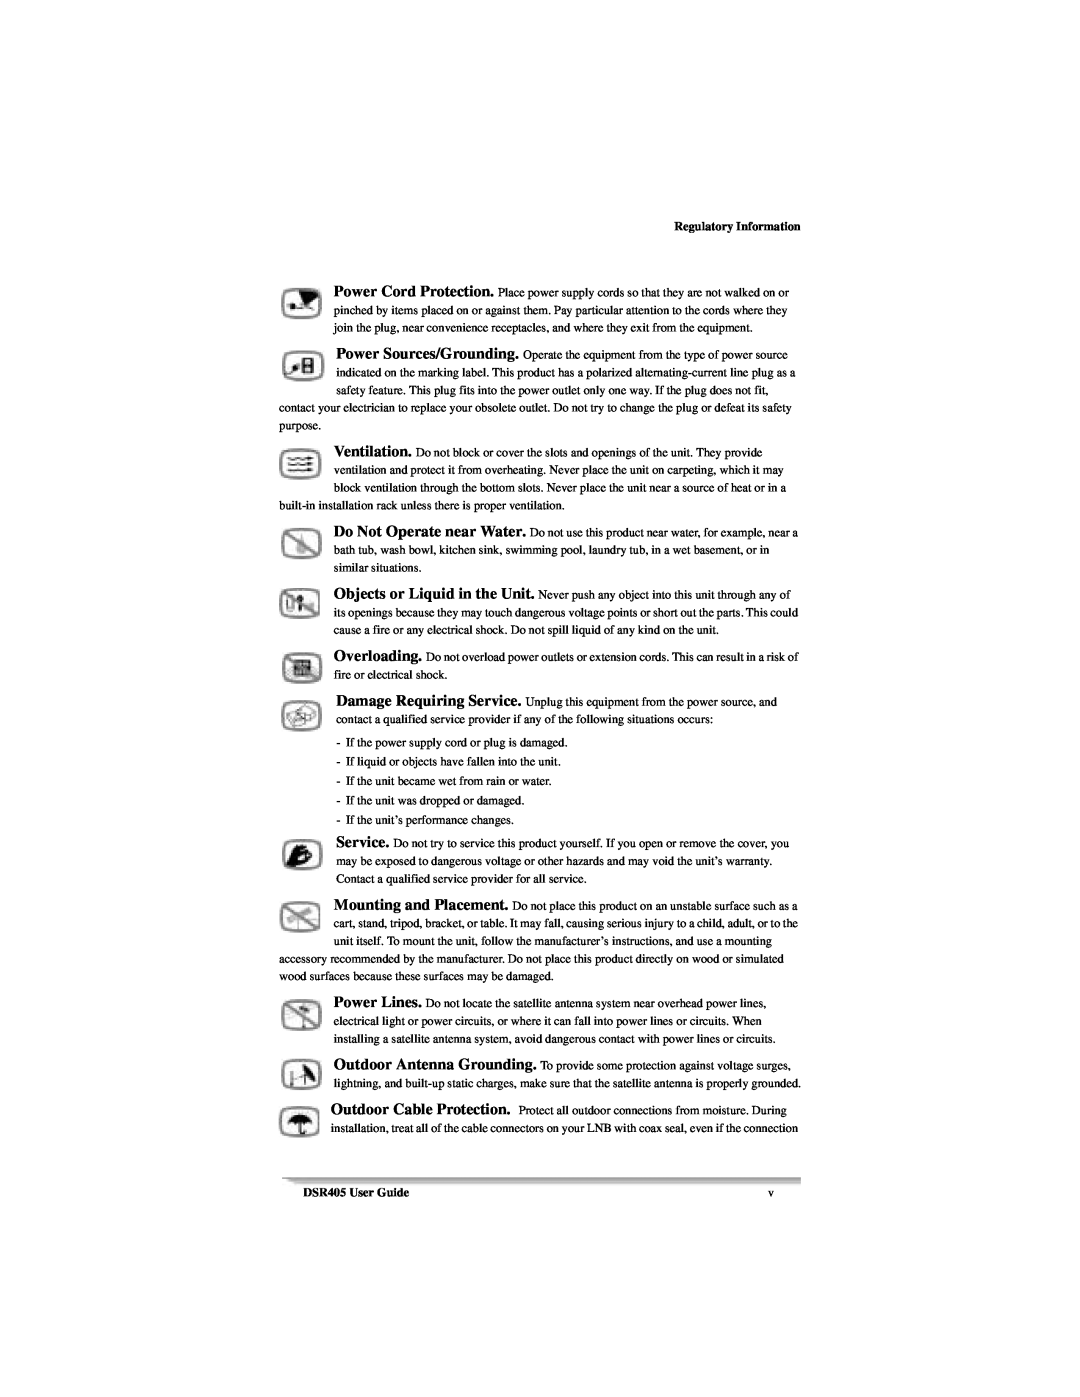 Motorola manual Regulatory Information, built-in installation rack unless there is proper ventilation, DSR405 User Guide 